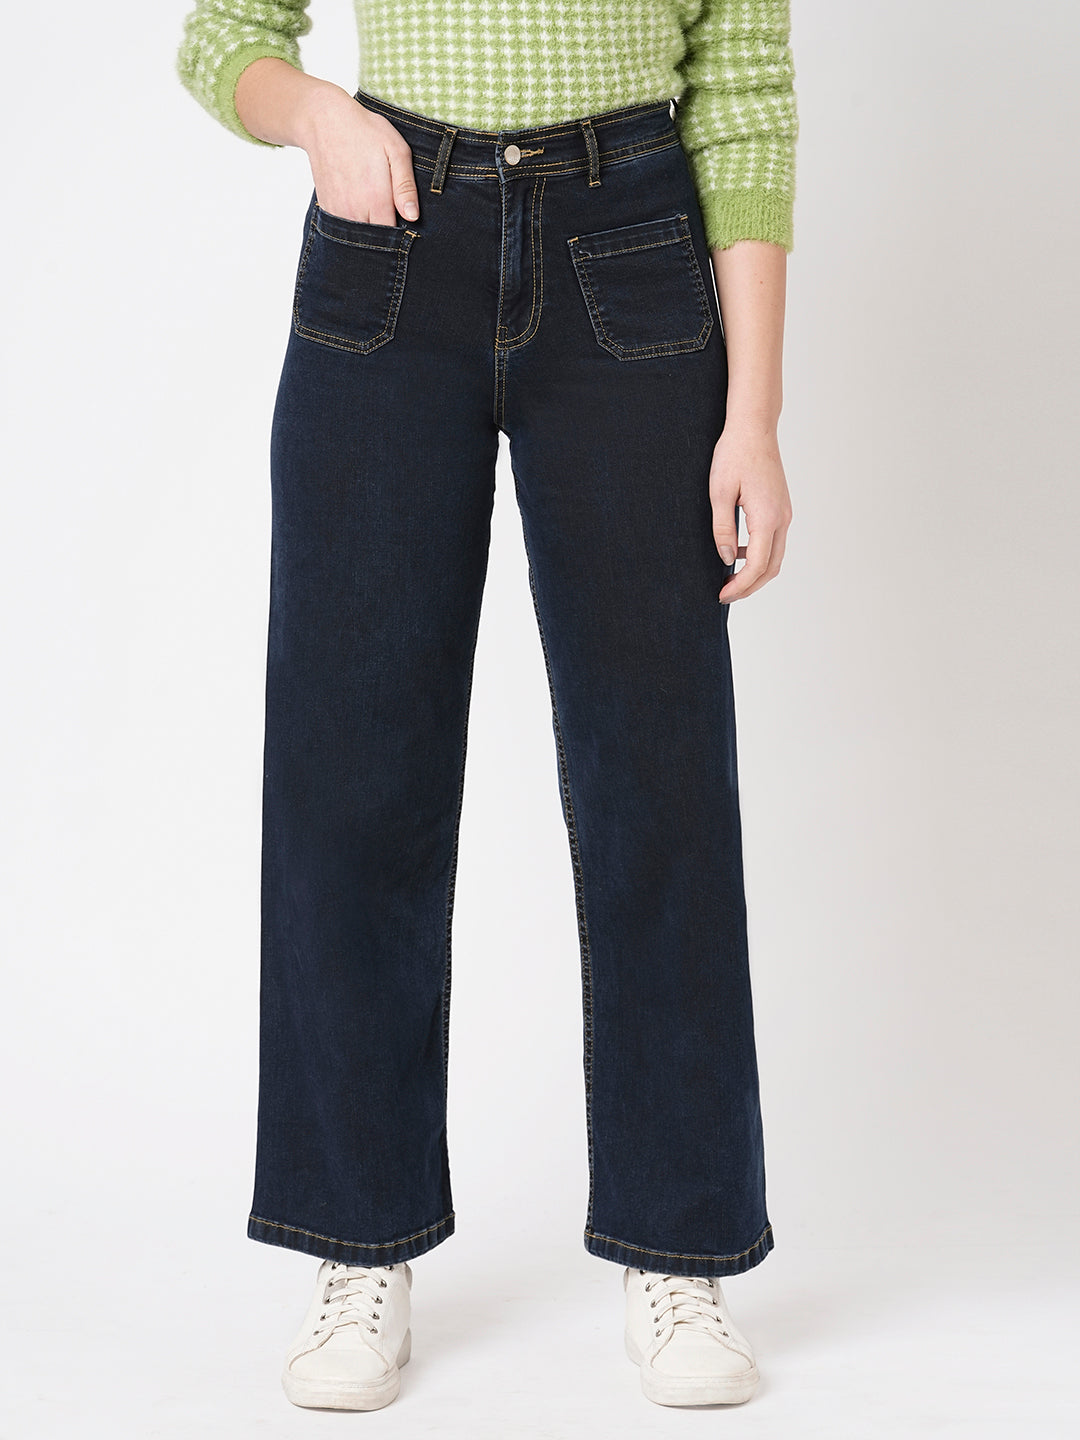 Buy Western Wear for Women Online at best price - Kraus Jeans